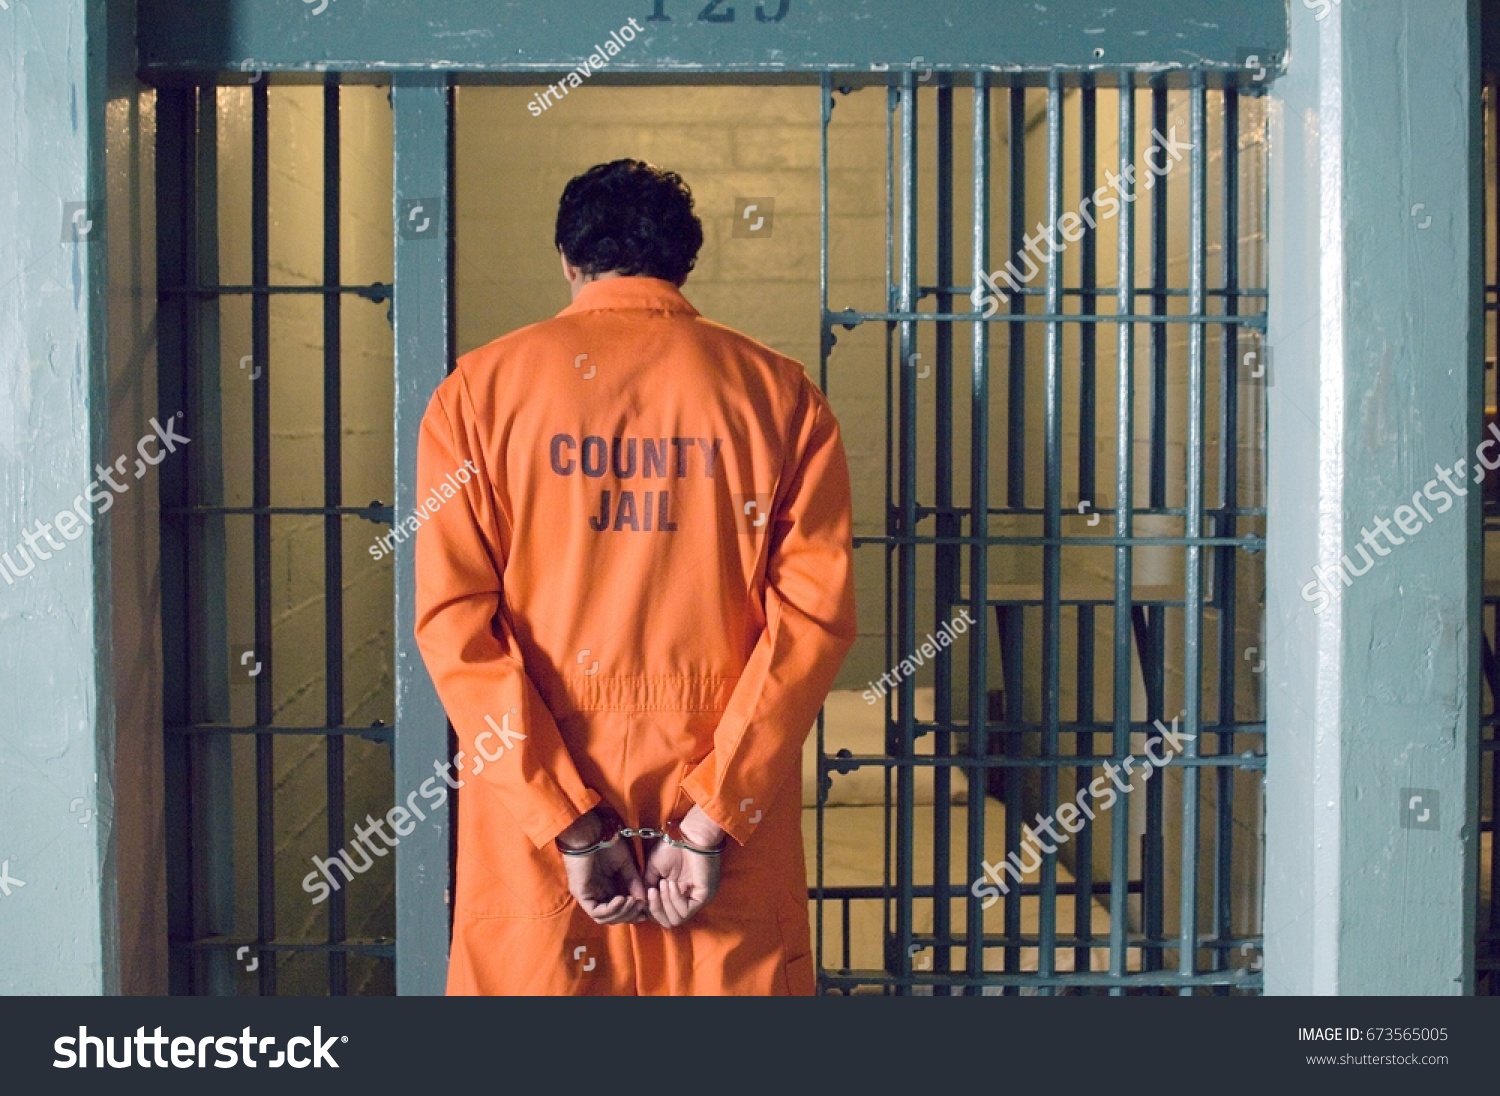 Handcuffed prisoner in jail #673565005